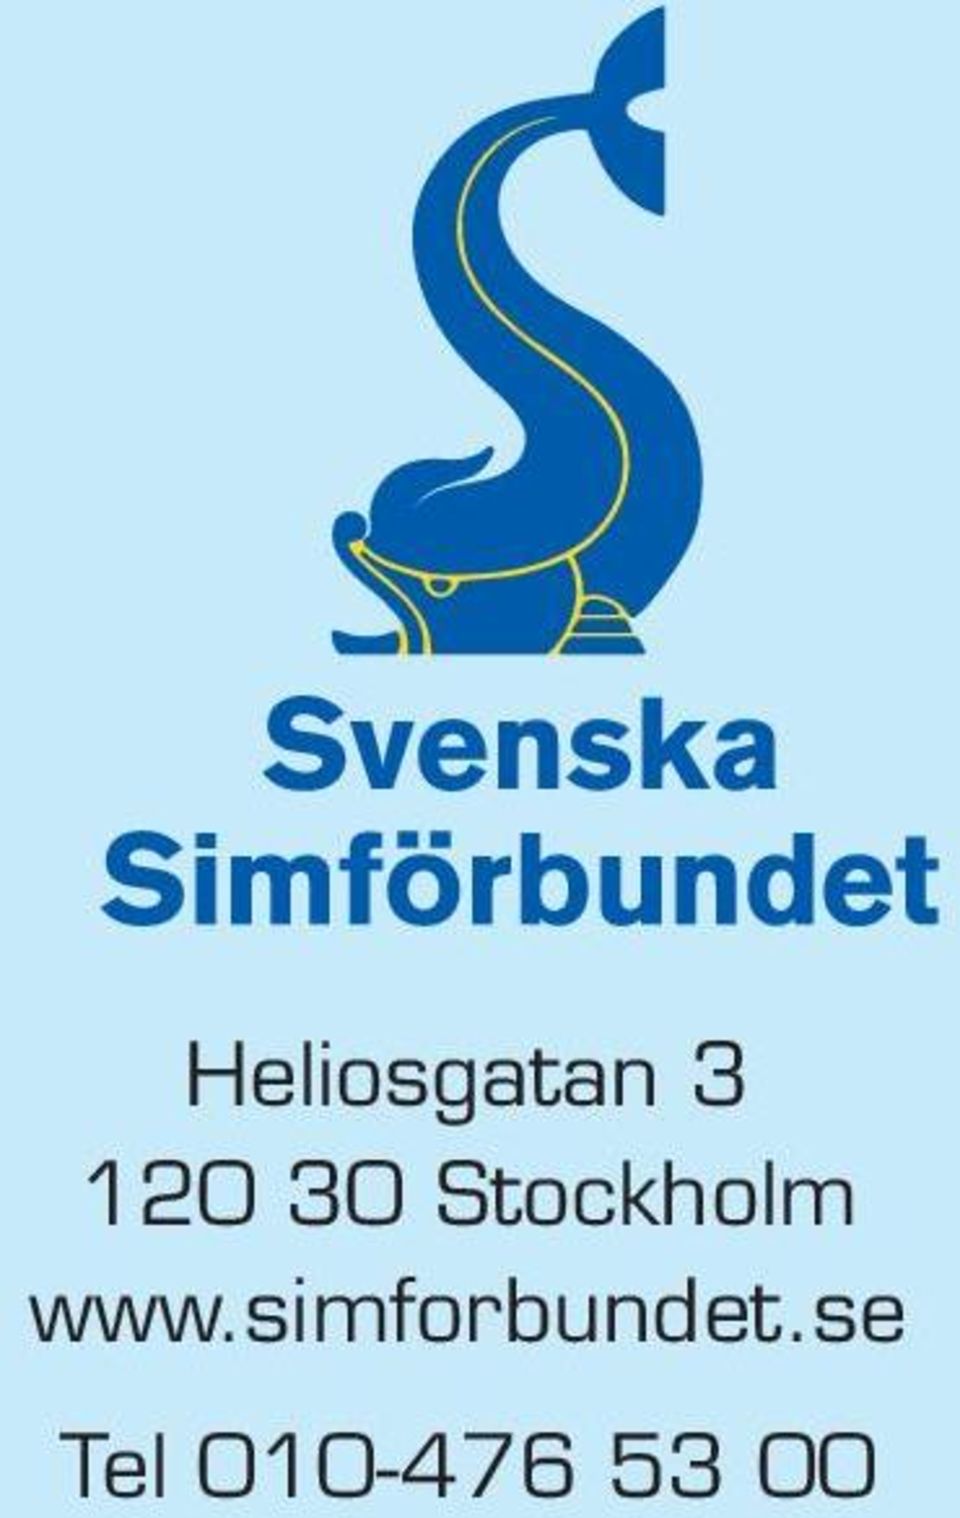 www.simforbundet.